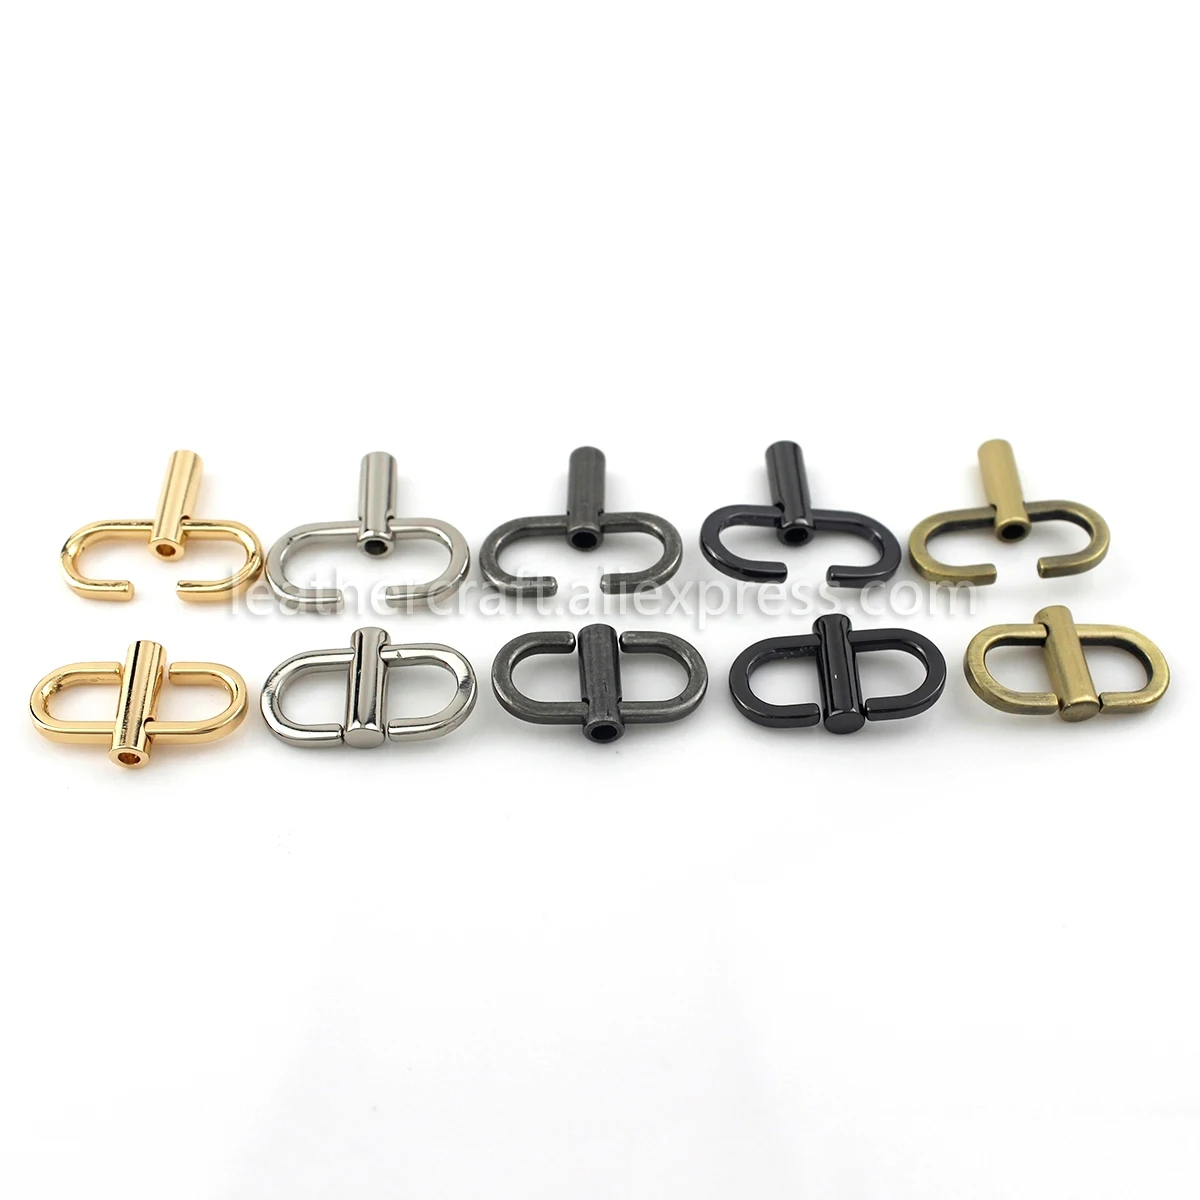 1pcs Metal Bag Strap Chain Adjustable Shorten Tool Swivel Ring Connectors Buckles 360 Degree Rotation More Color